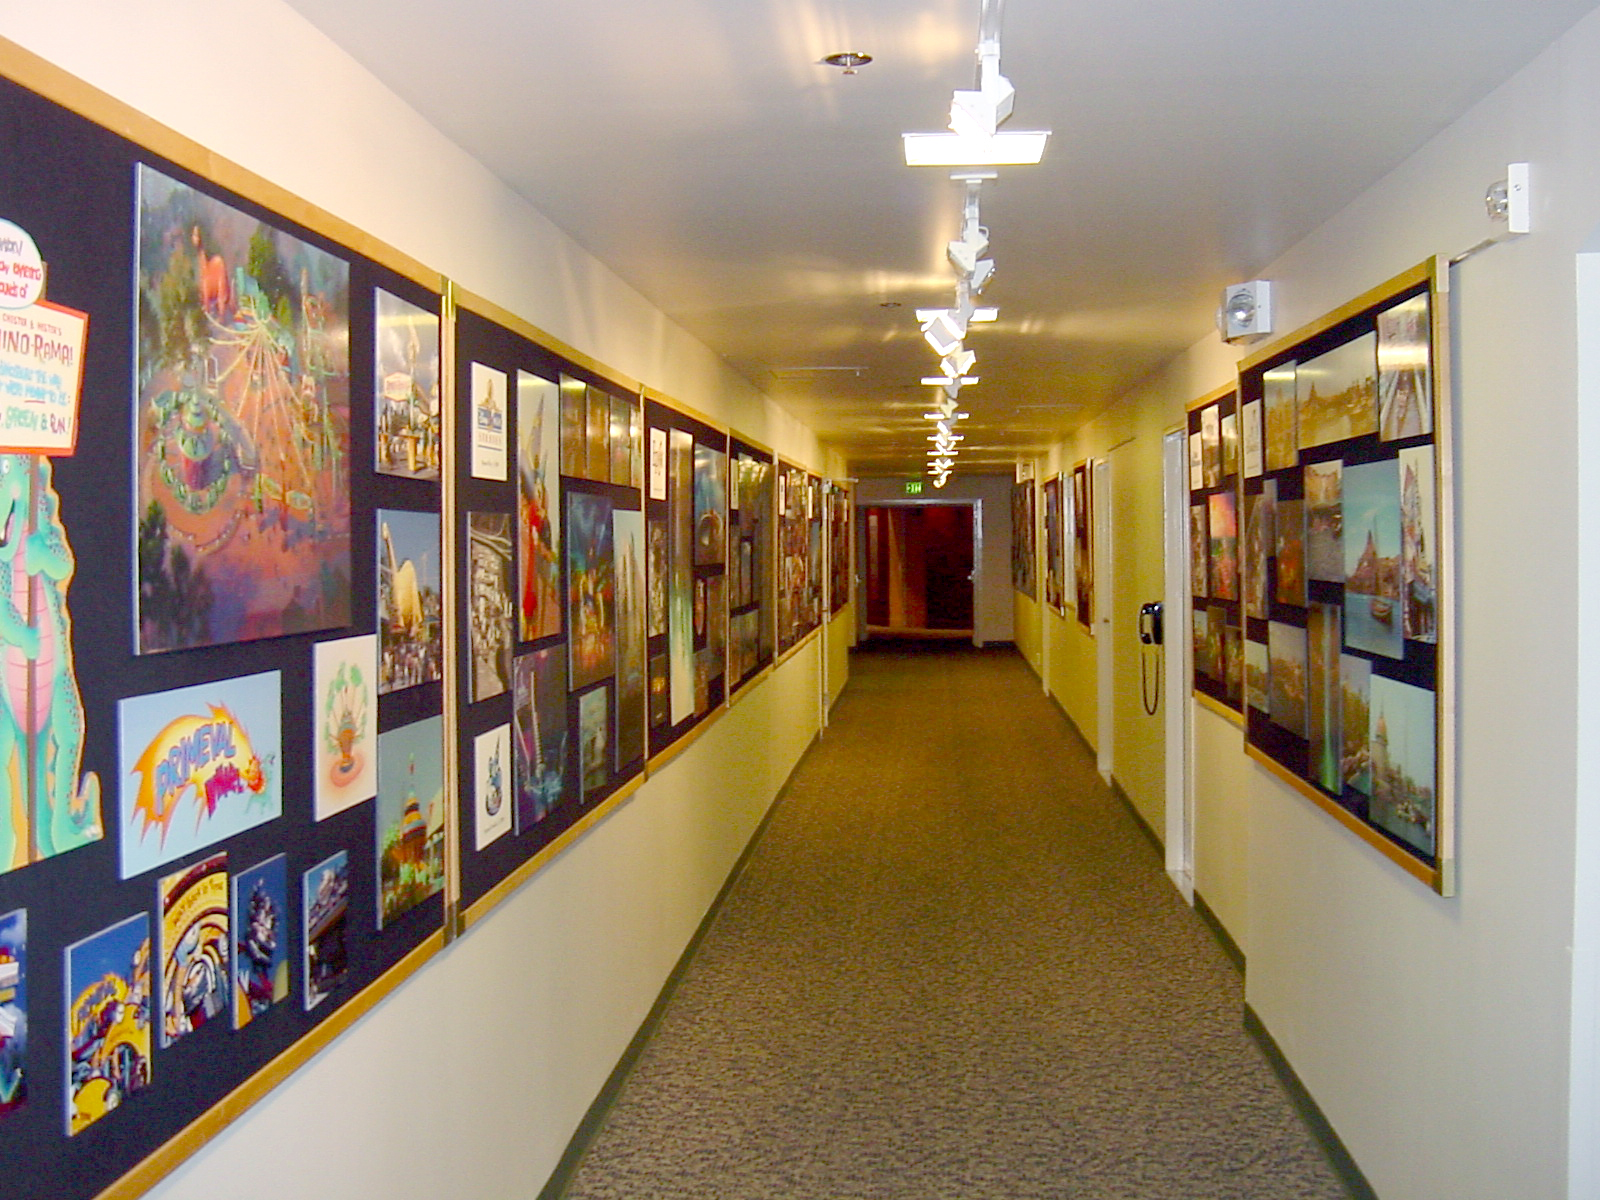 Disney Studios at 1401 S Flower Interior Hallway